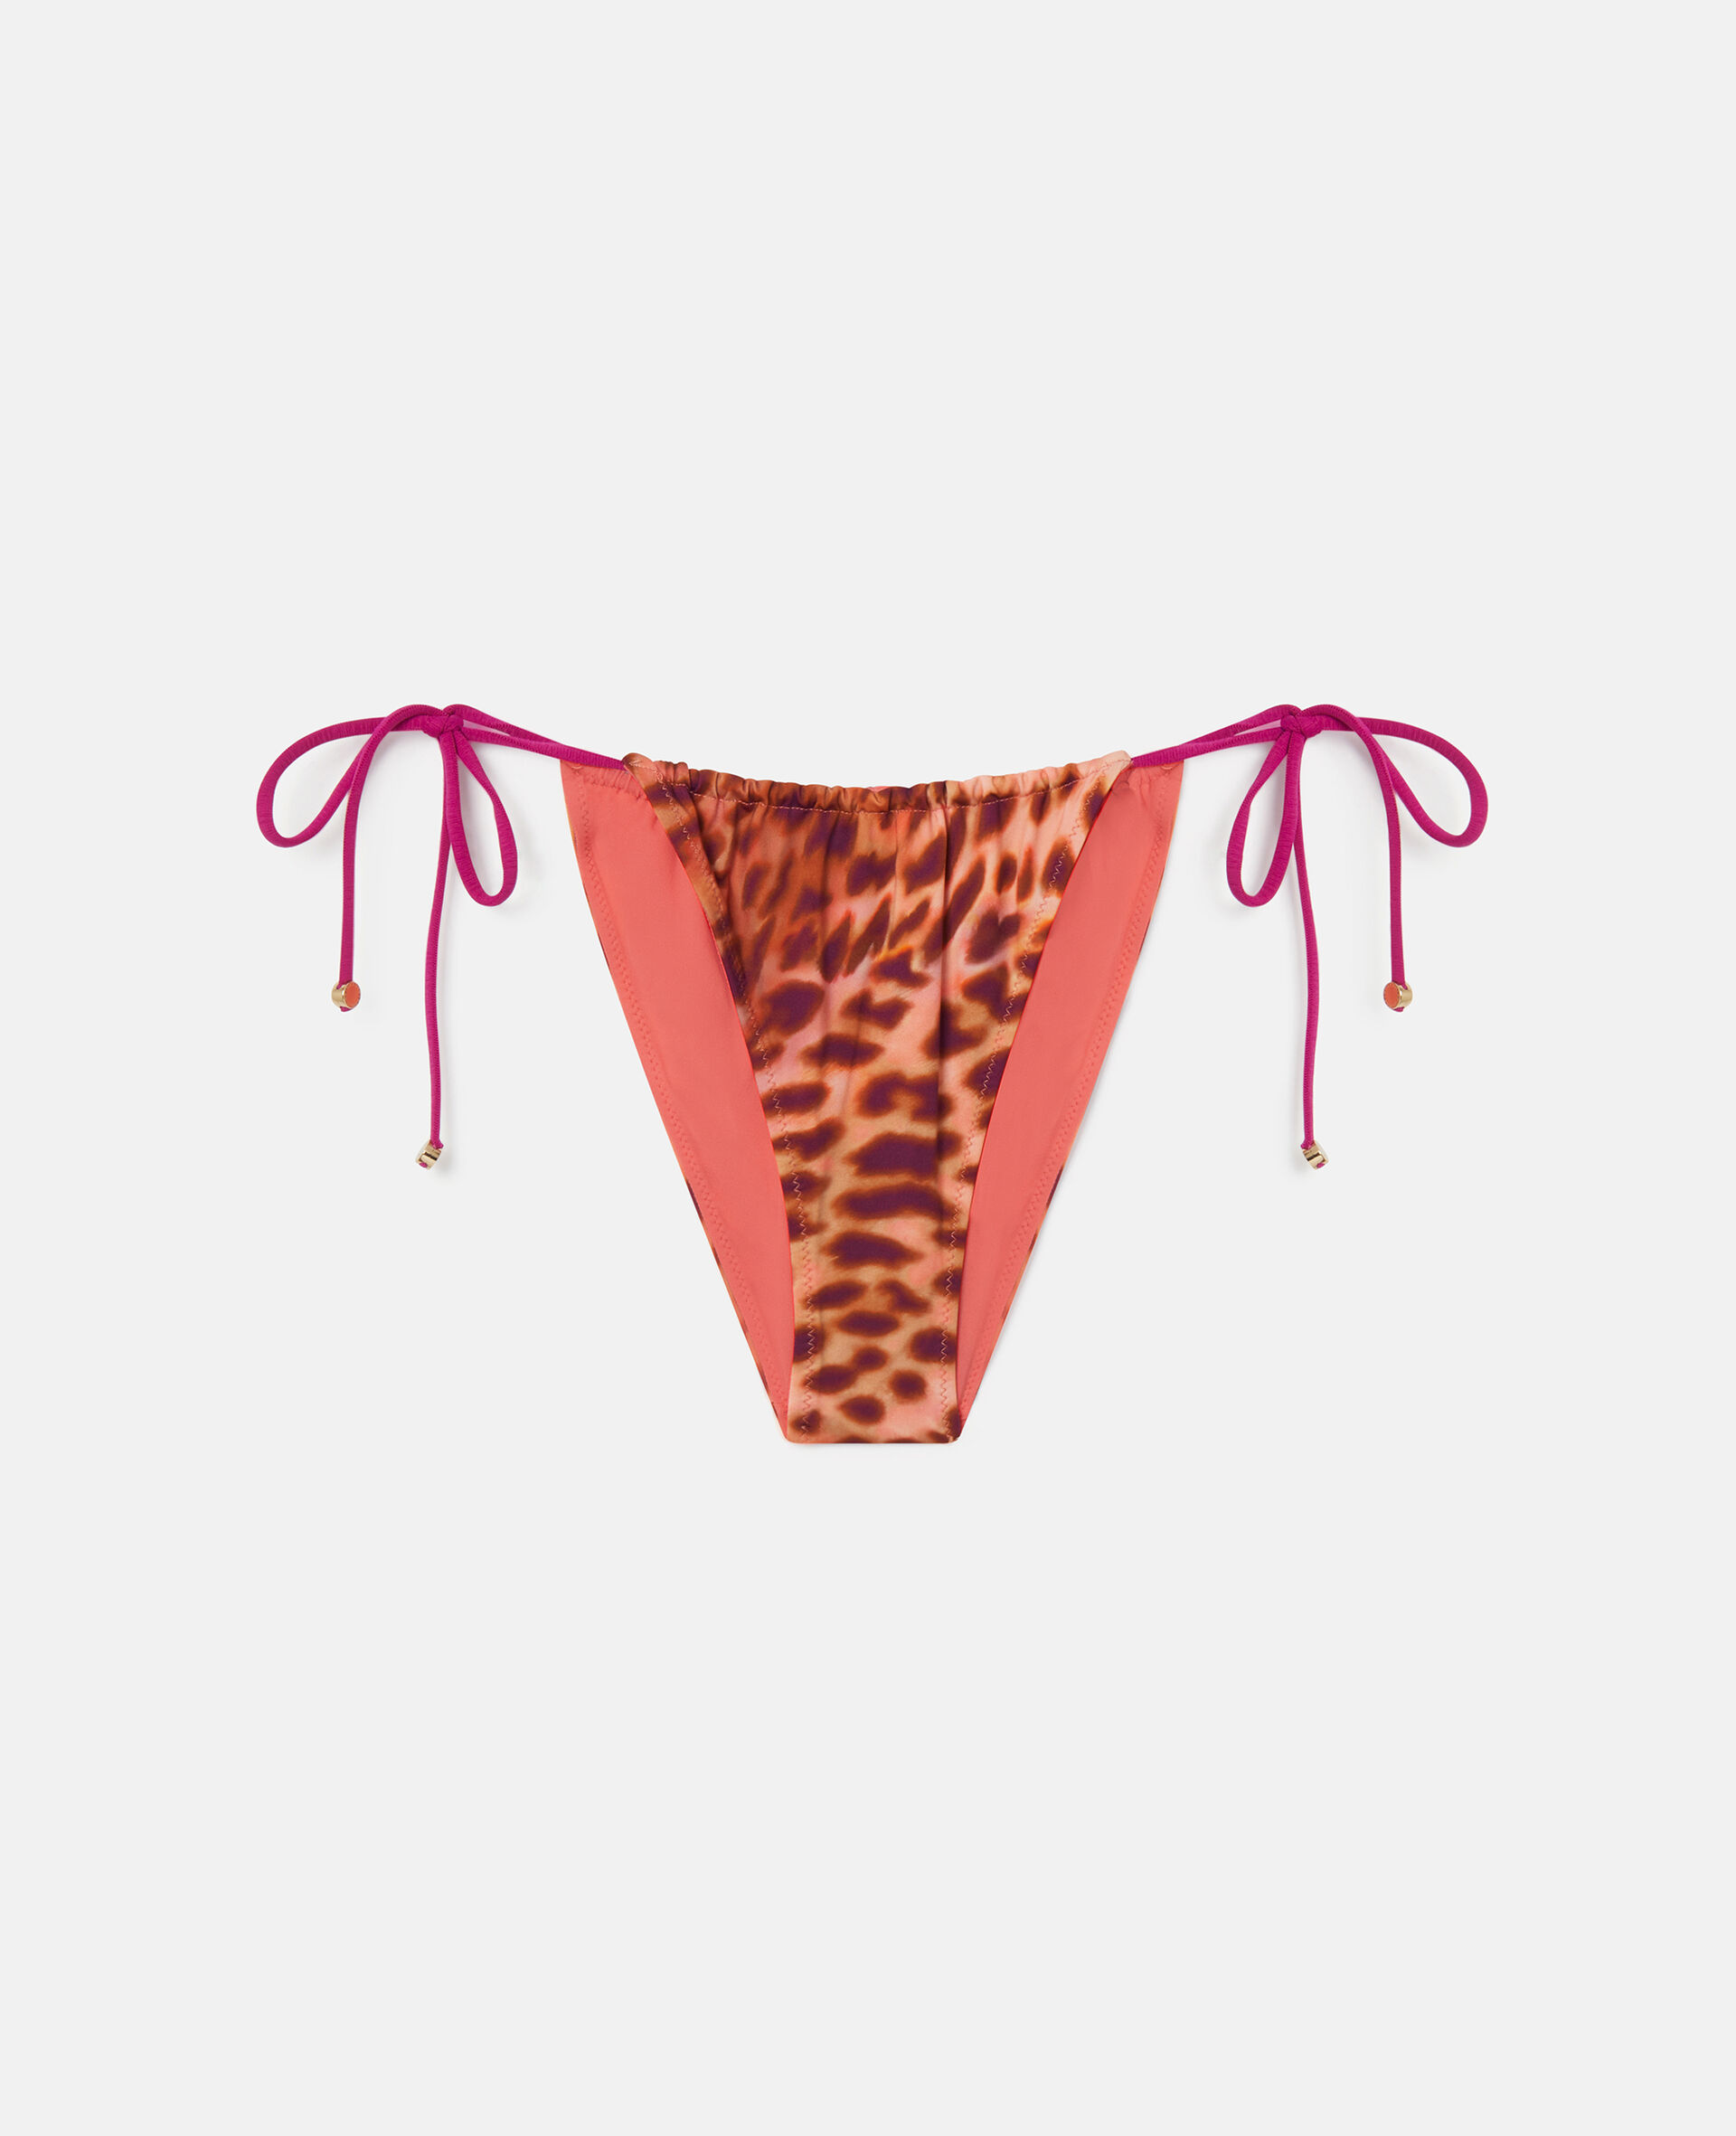 Culotte de bikini a nouage lateral imprime guepard flou-Rose-medium